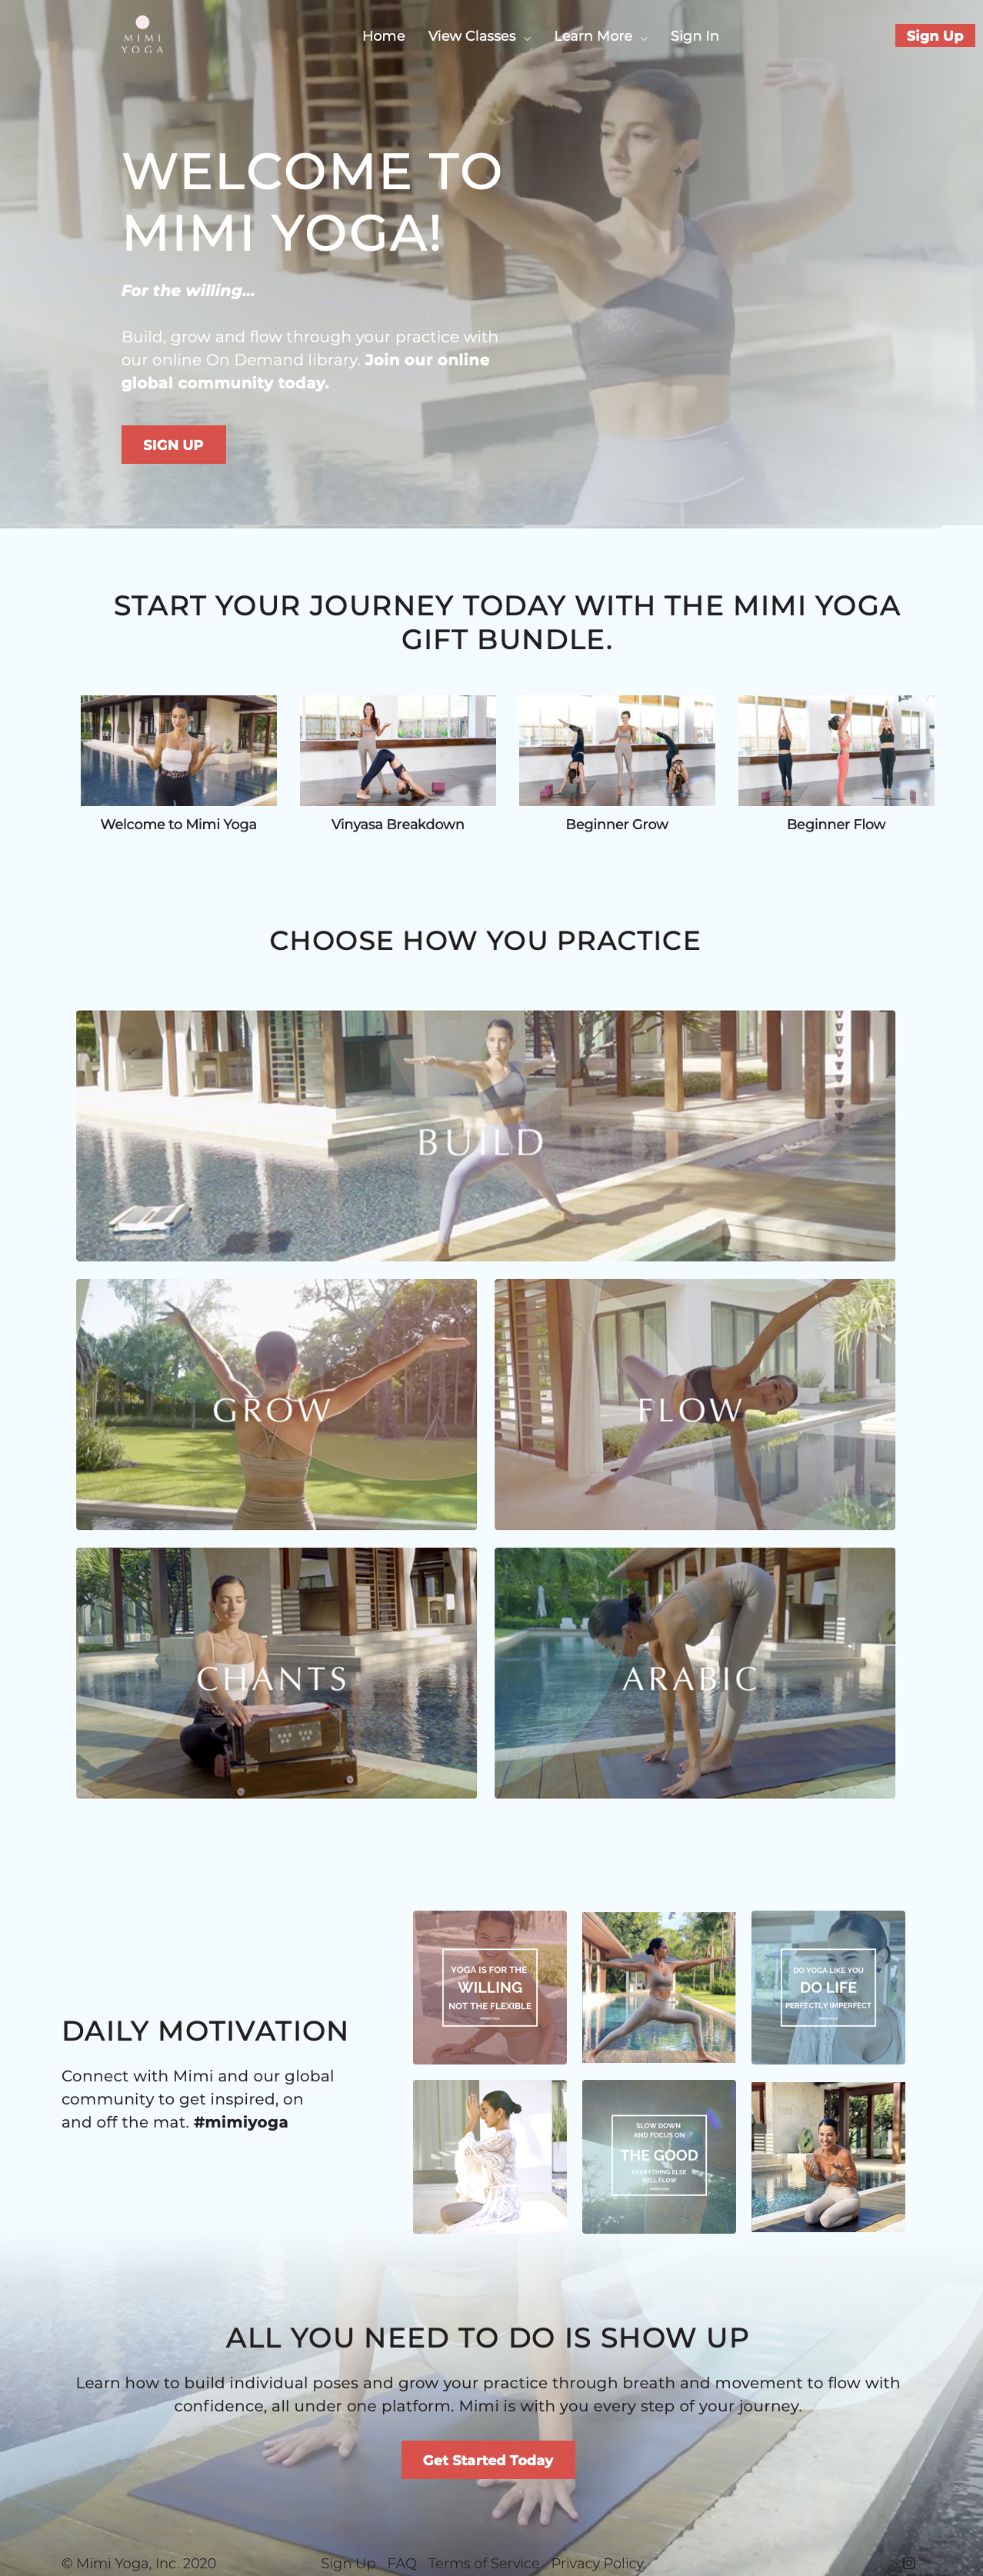 Mimi-Yoga-Homepage.jpg